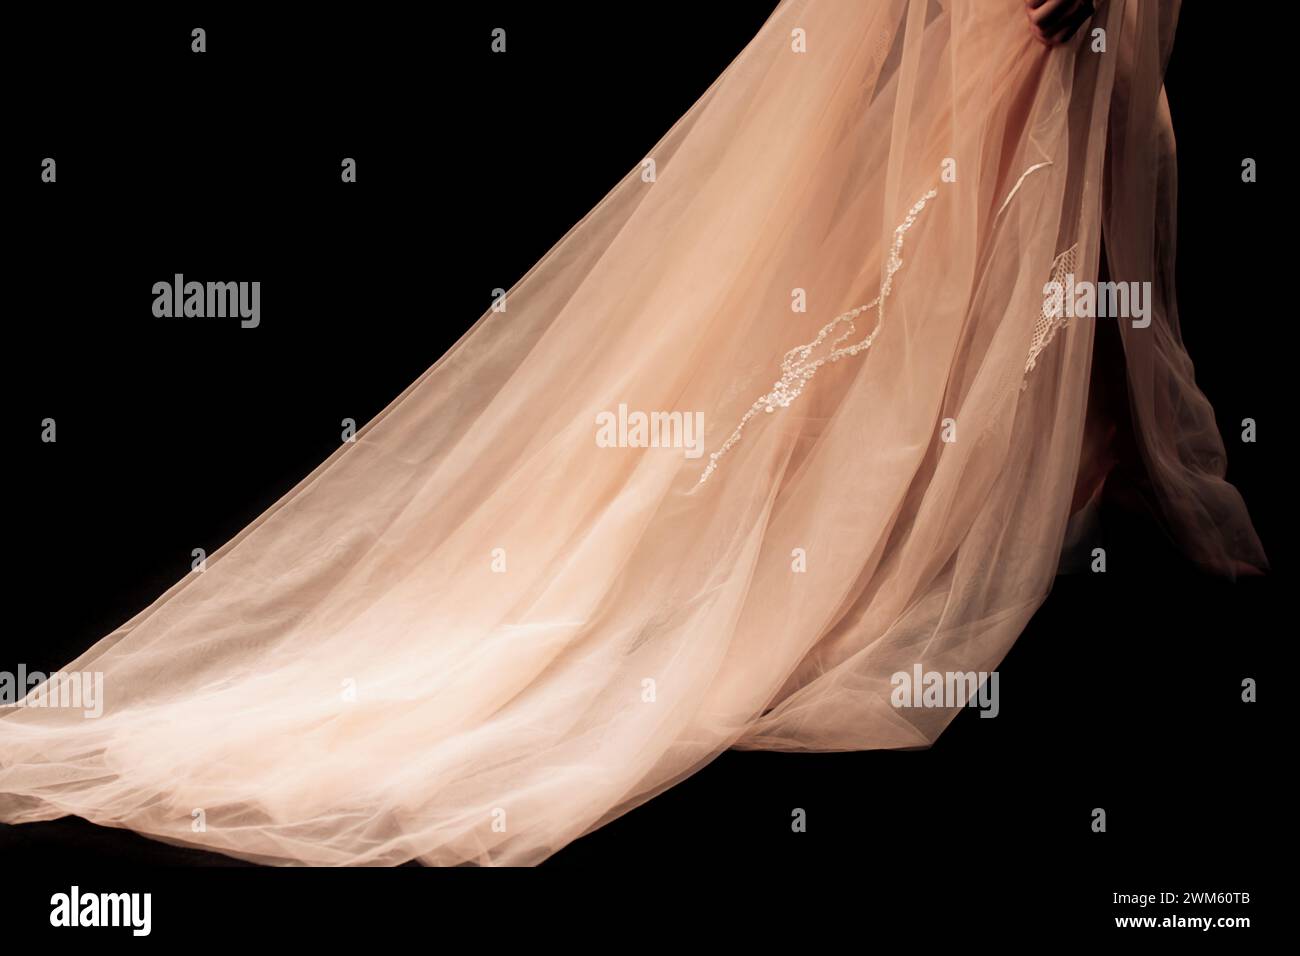 Detalles de larga noche beige chic falda sobre un fondo negro. Moda femenina ropa elegante Foto de stock